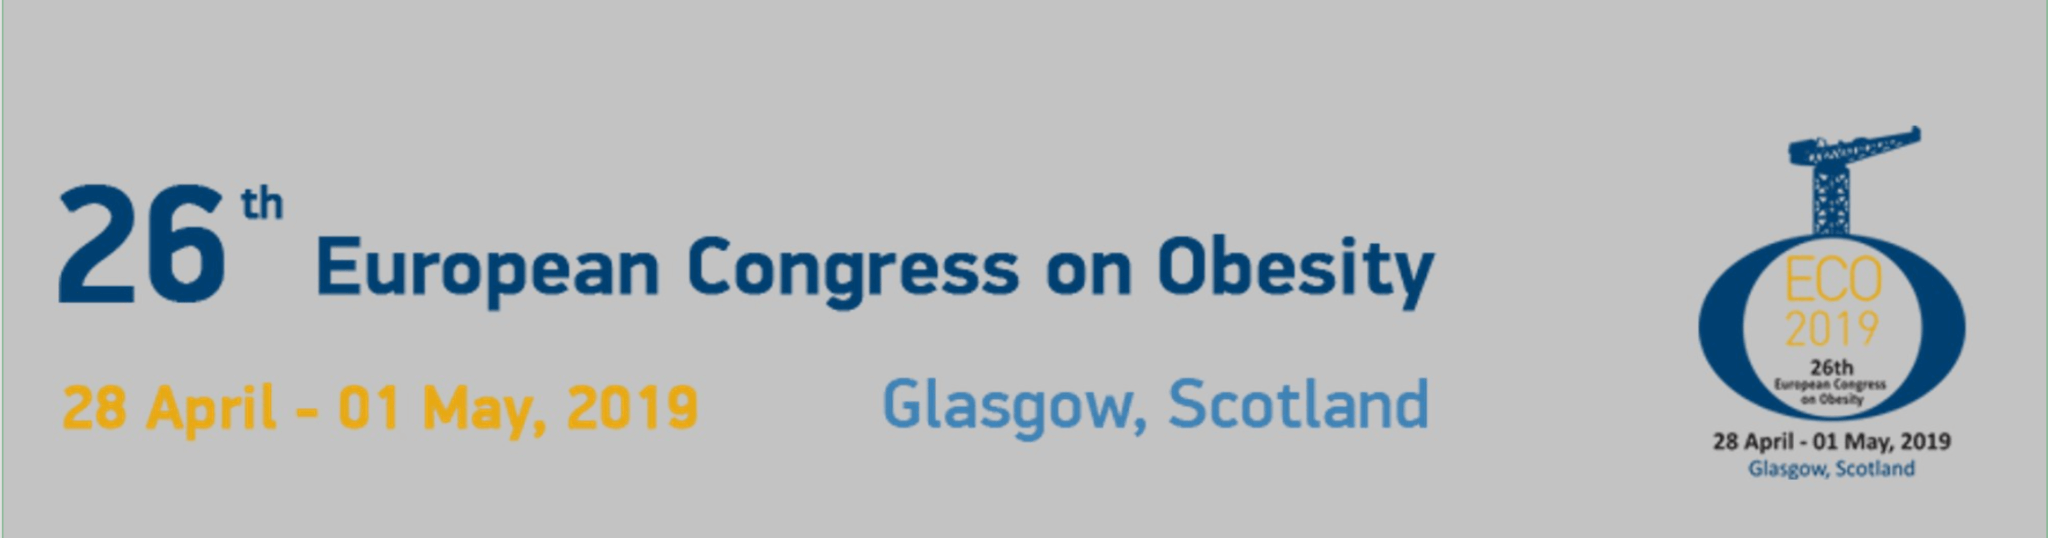 26th European Congress on Obesity International Sweeteners Association